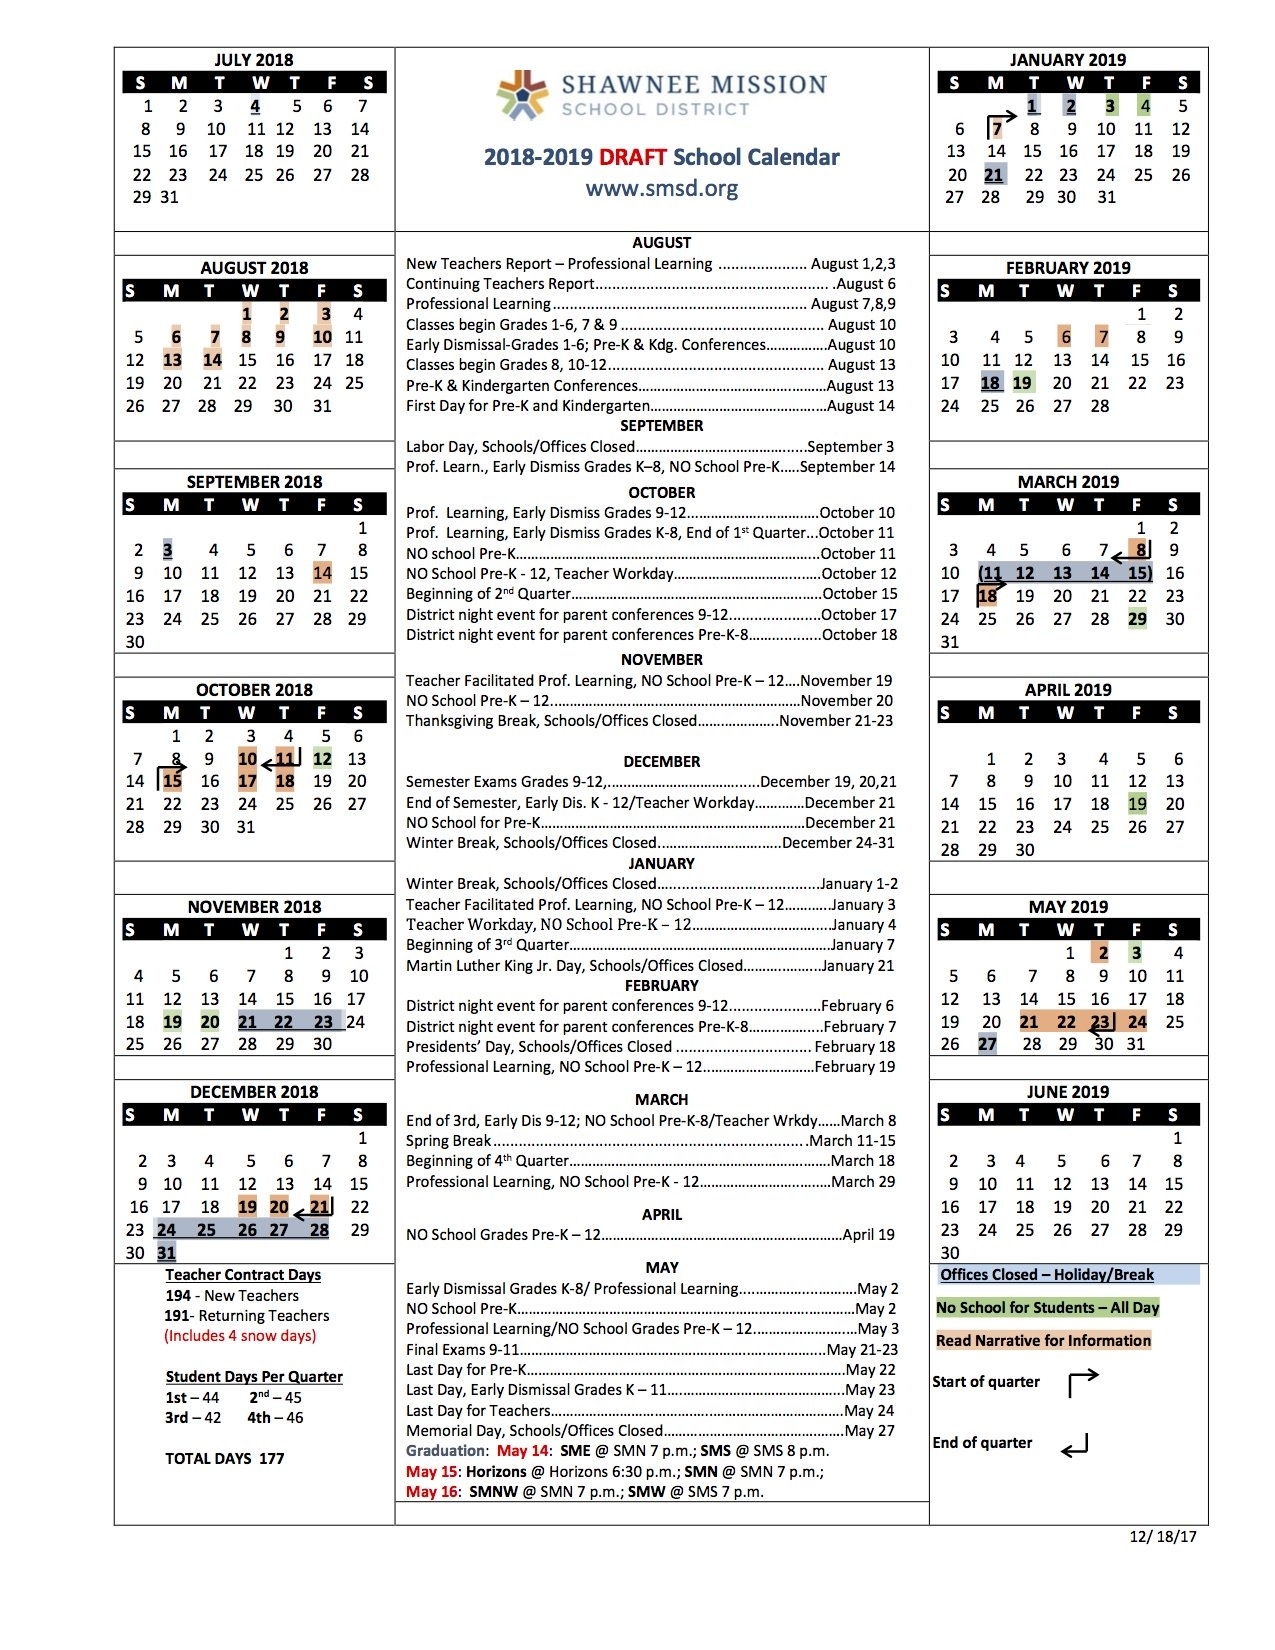 Board Approves 2018-19 Calendar That Has Shawnee Mission Classes School Calendar District 99